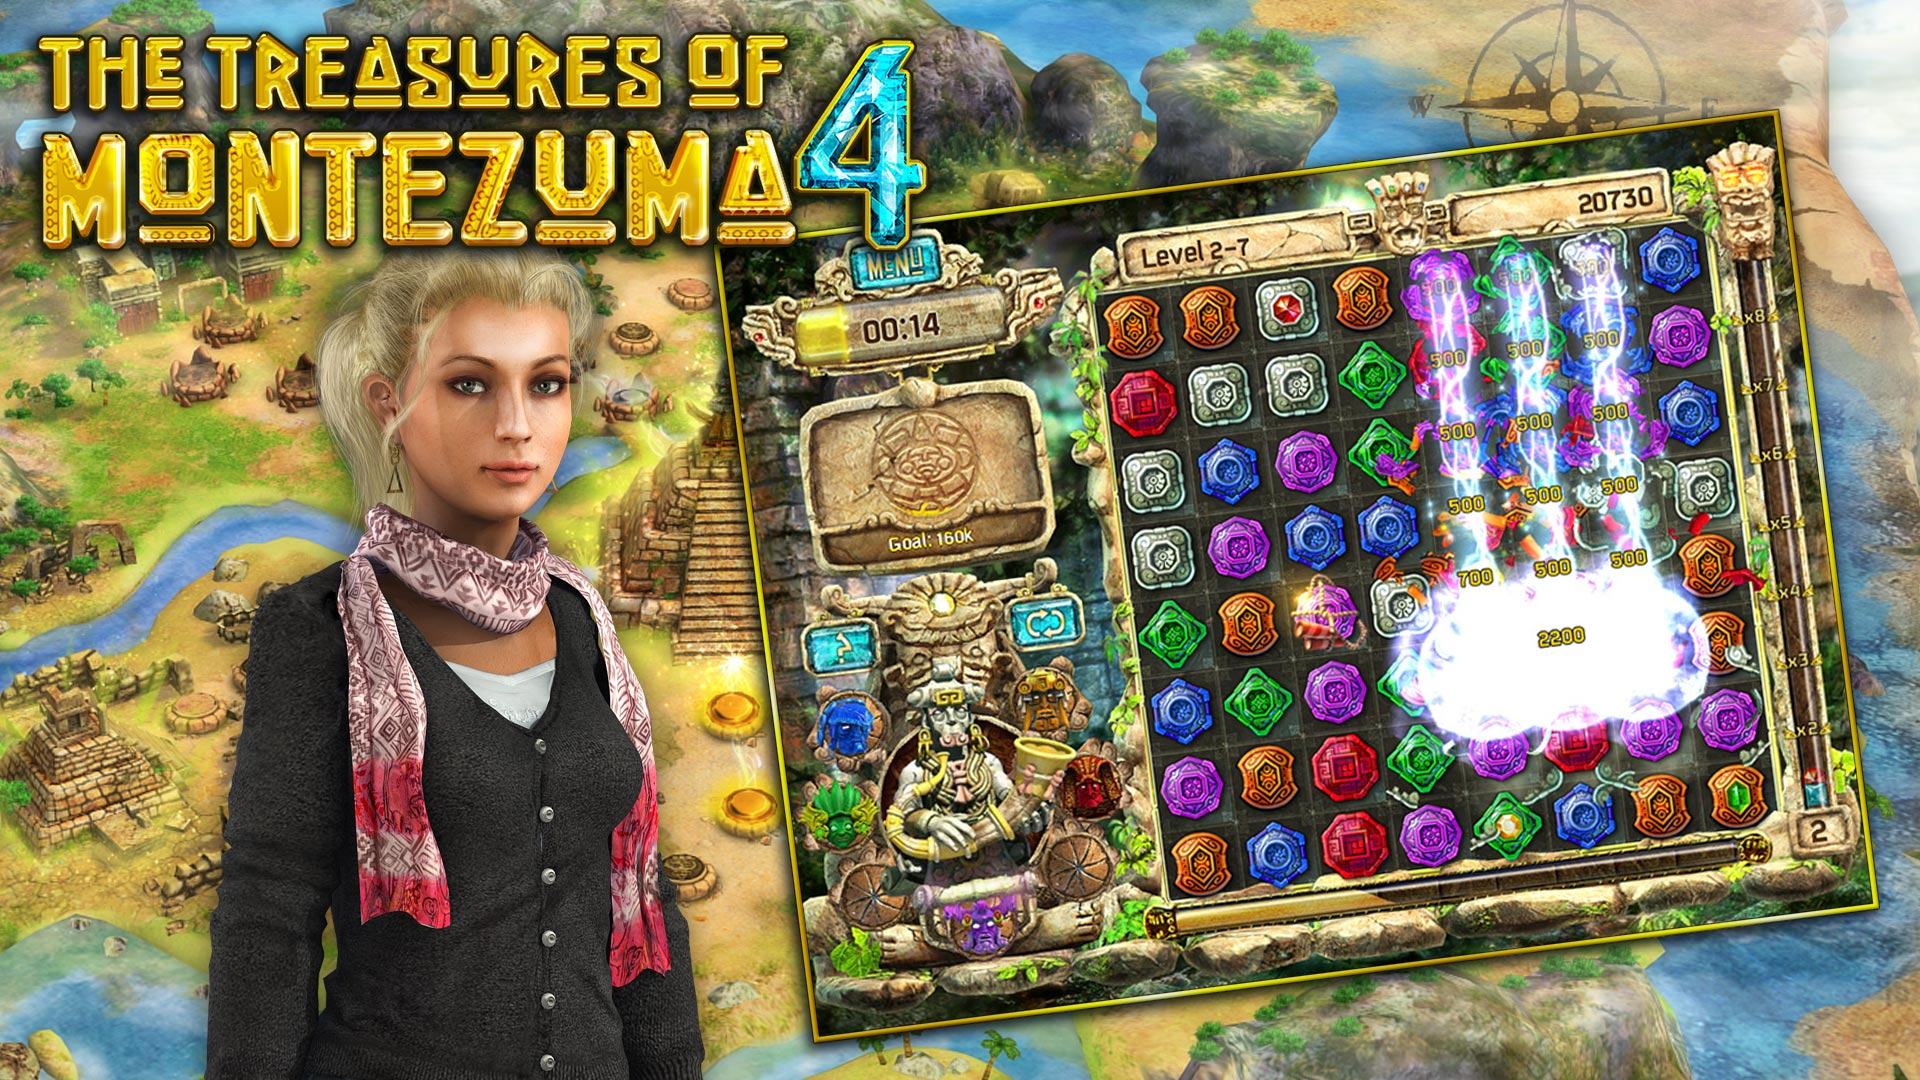 The treasures of montezuma 4 torrent